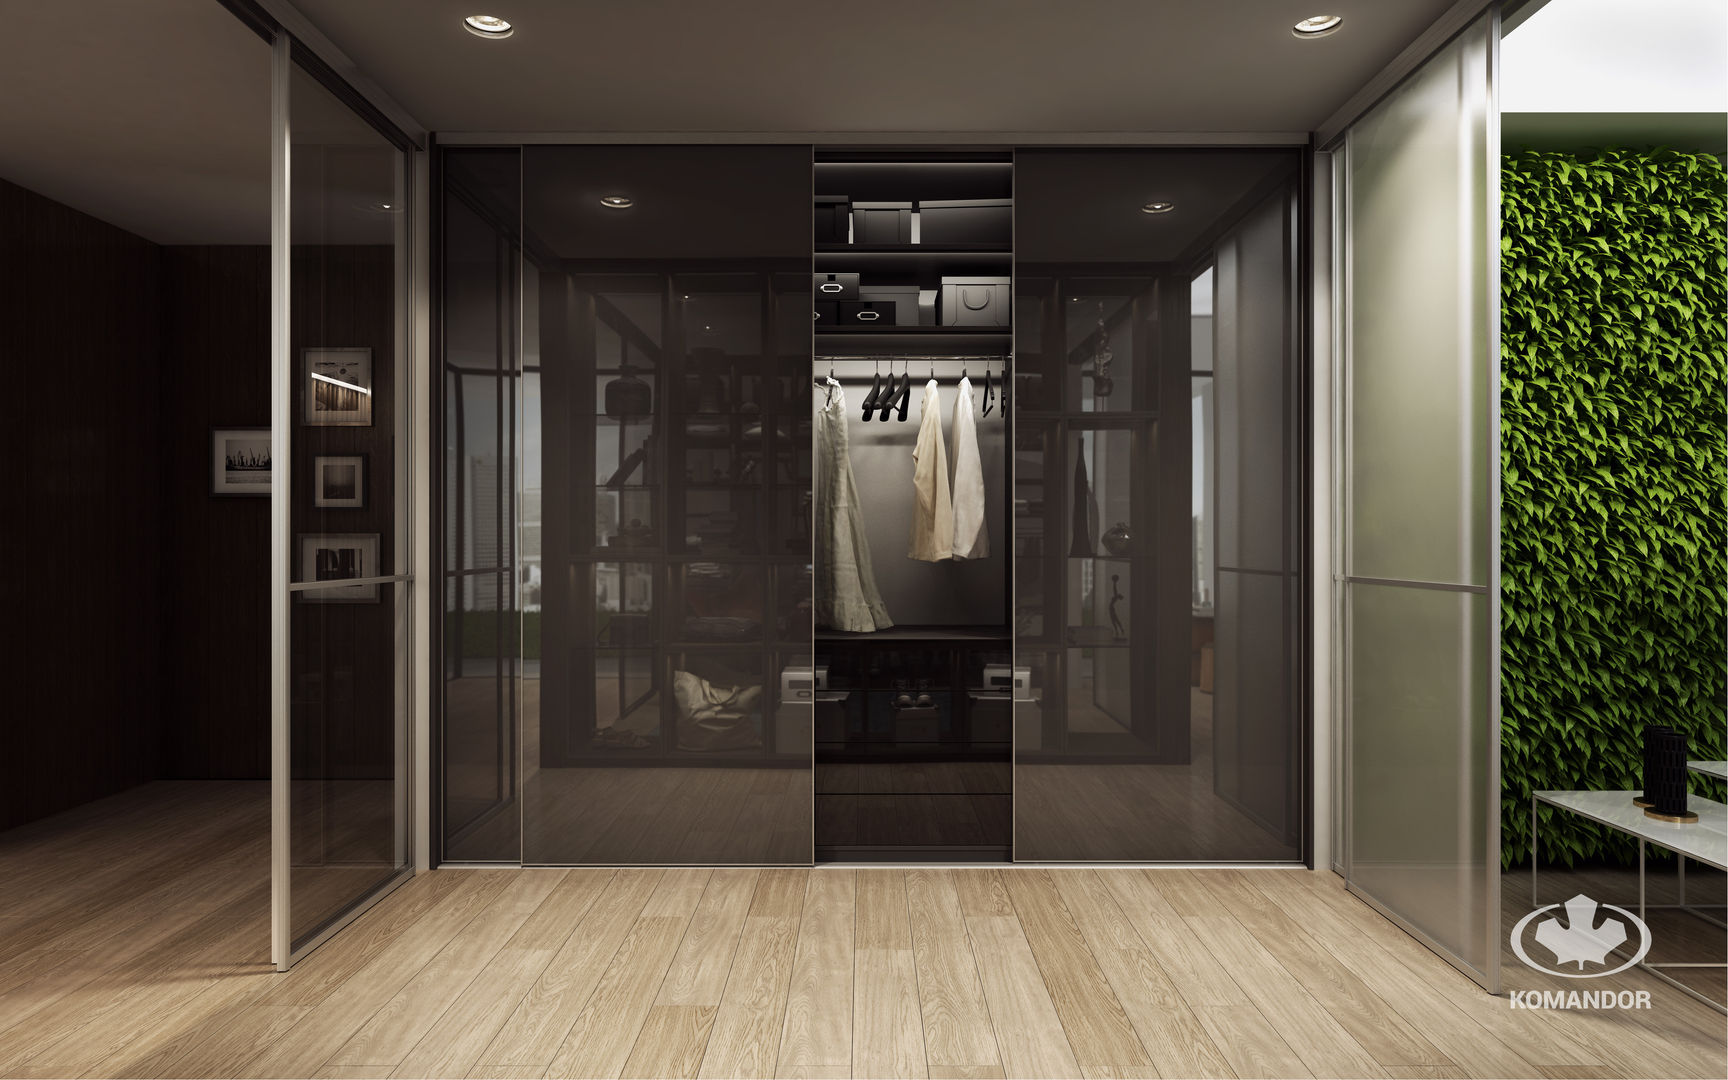 Sypialnia połączona z garderobą, Komandor - Wnętrza z charakterem Komandor - Wnętrza z charakterem ห้องแต่งตัว กระจกและแก้ว